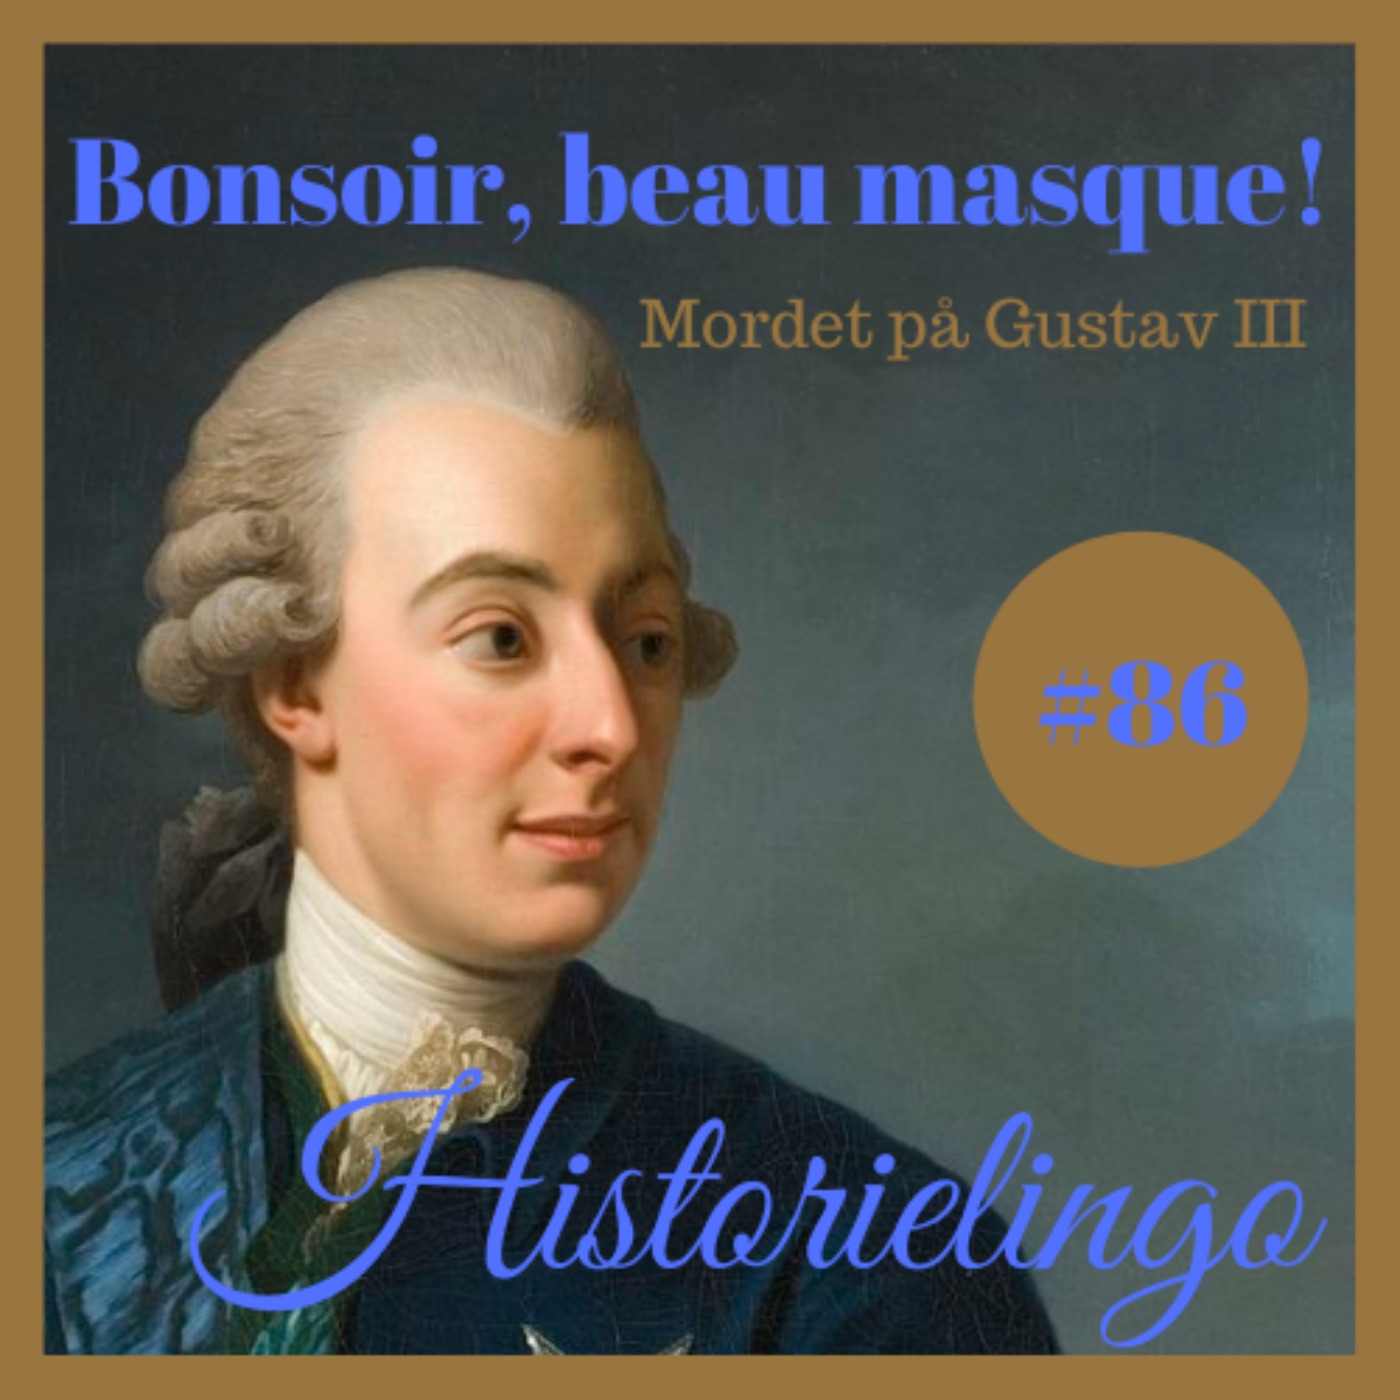 Avsnitt 86: Bonsoir, beau masque! - Mordet på Gustav III